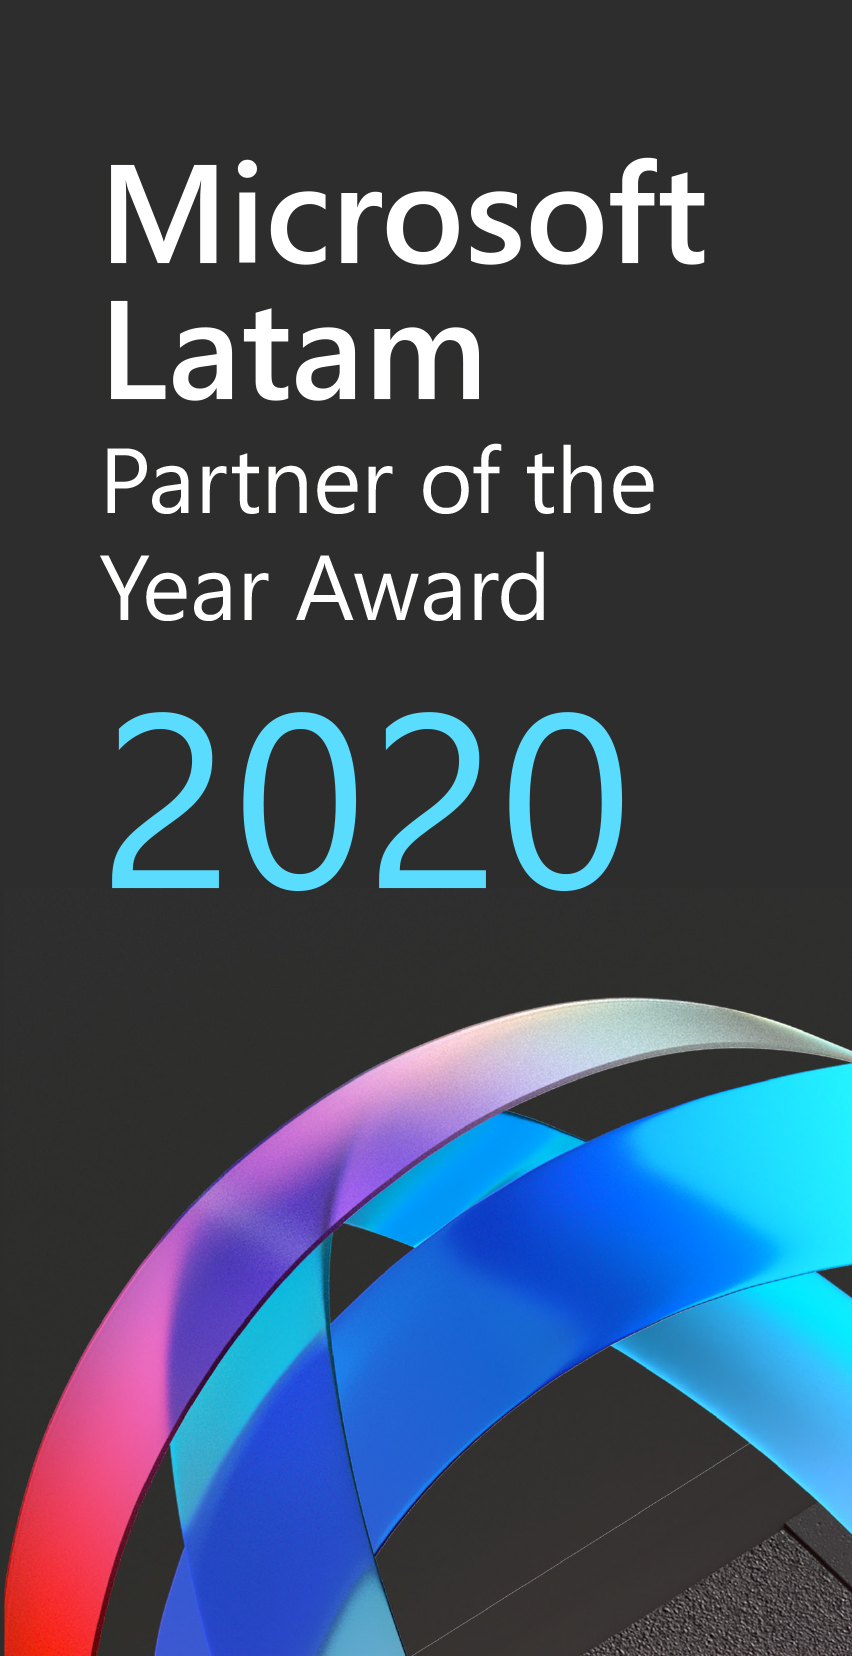 Microsoft Latam Partner of the Year Awards 2020